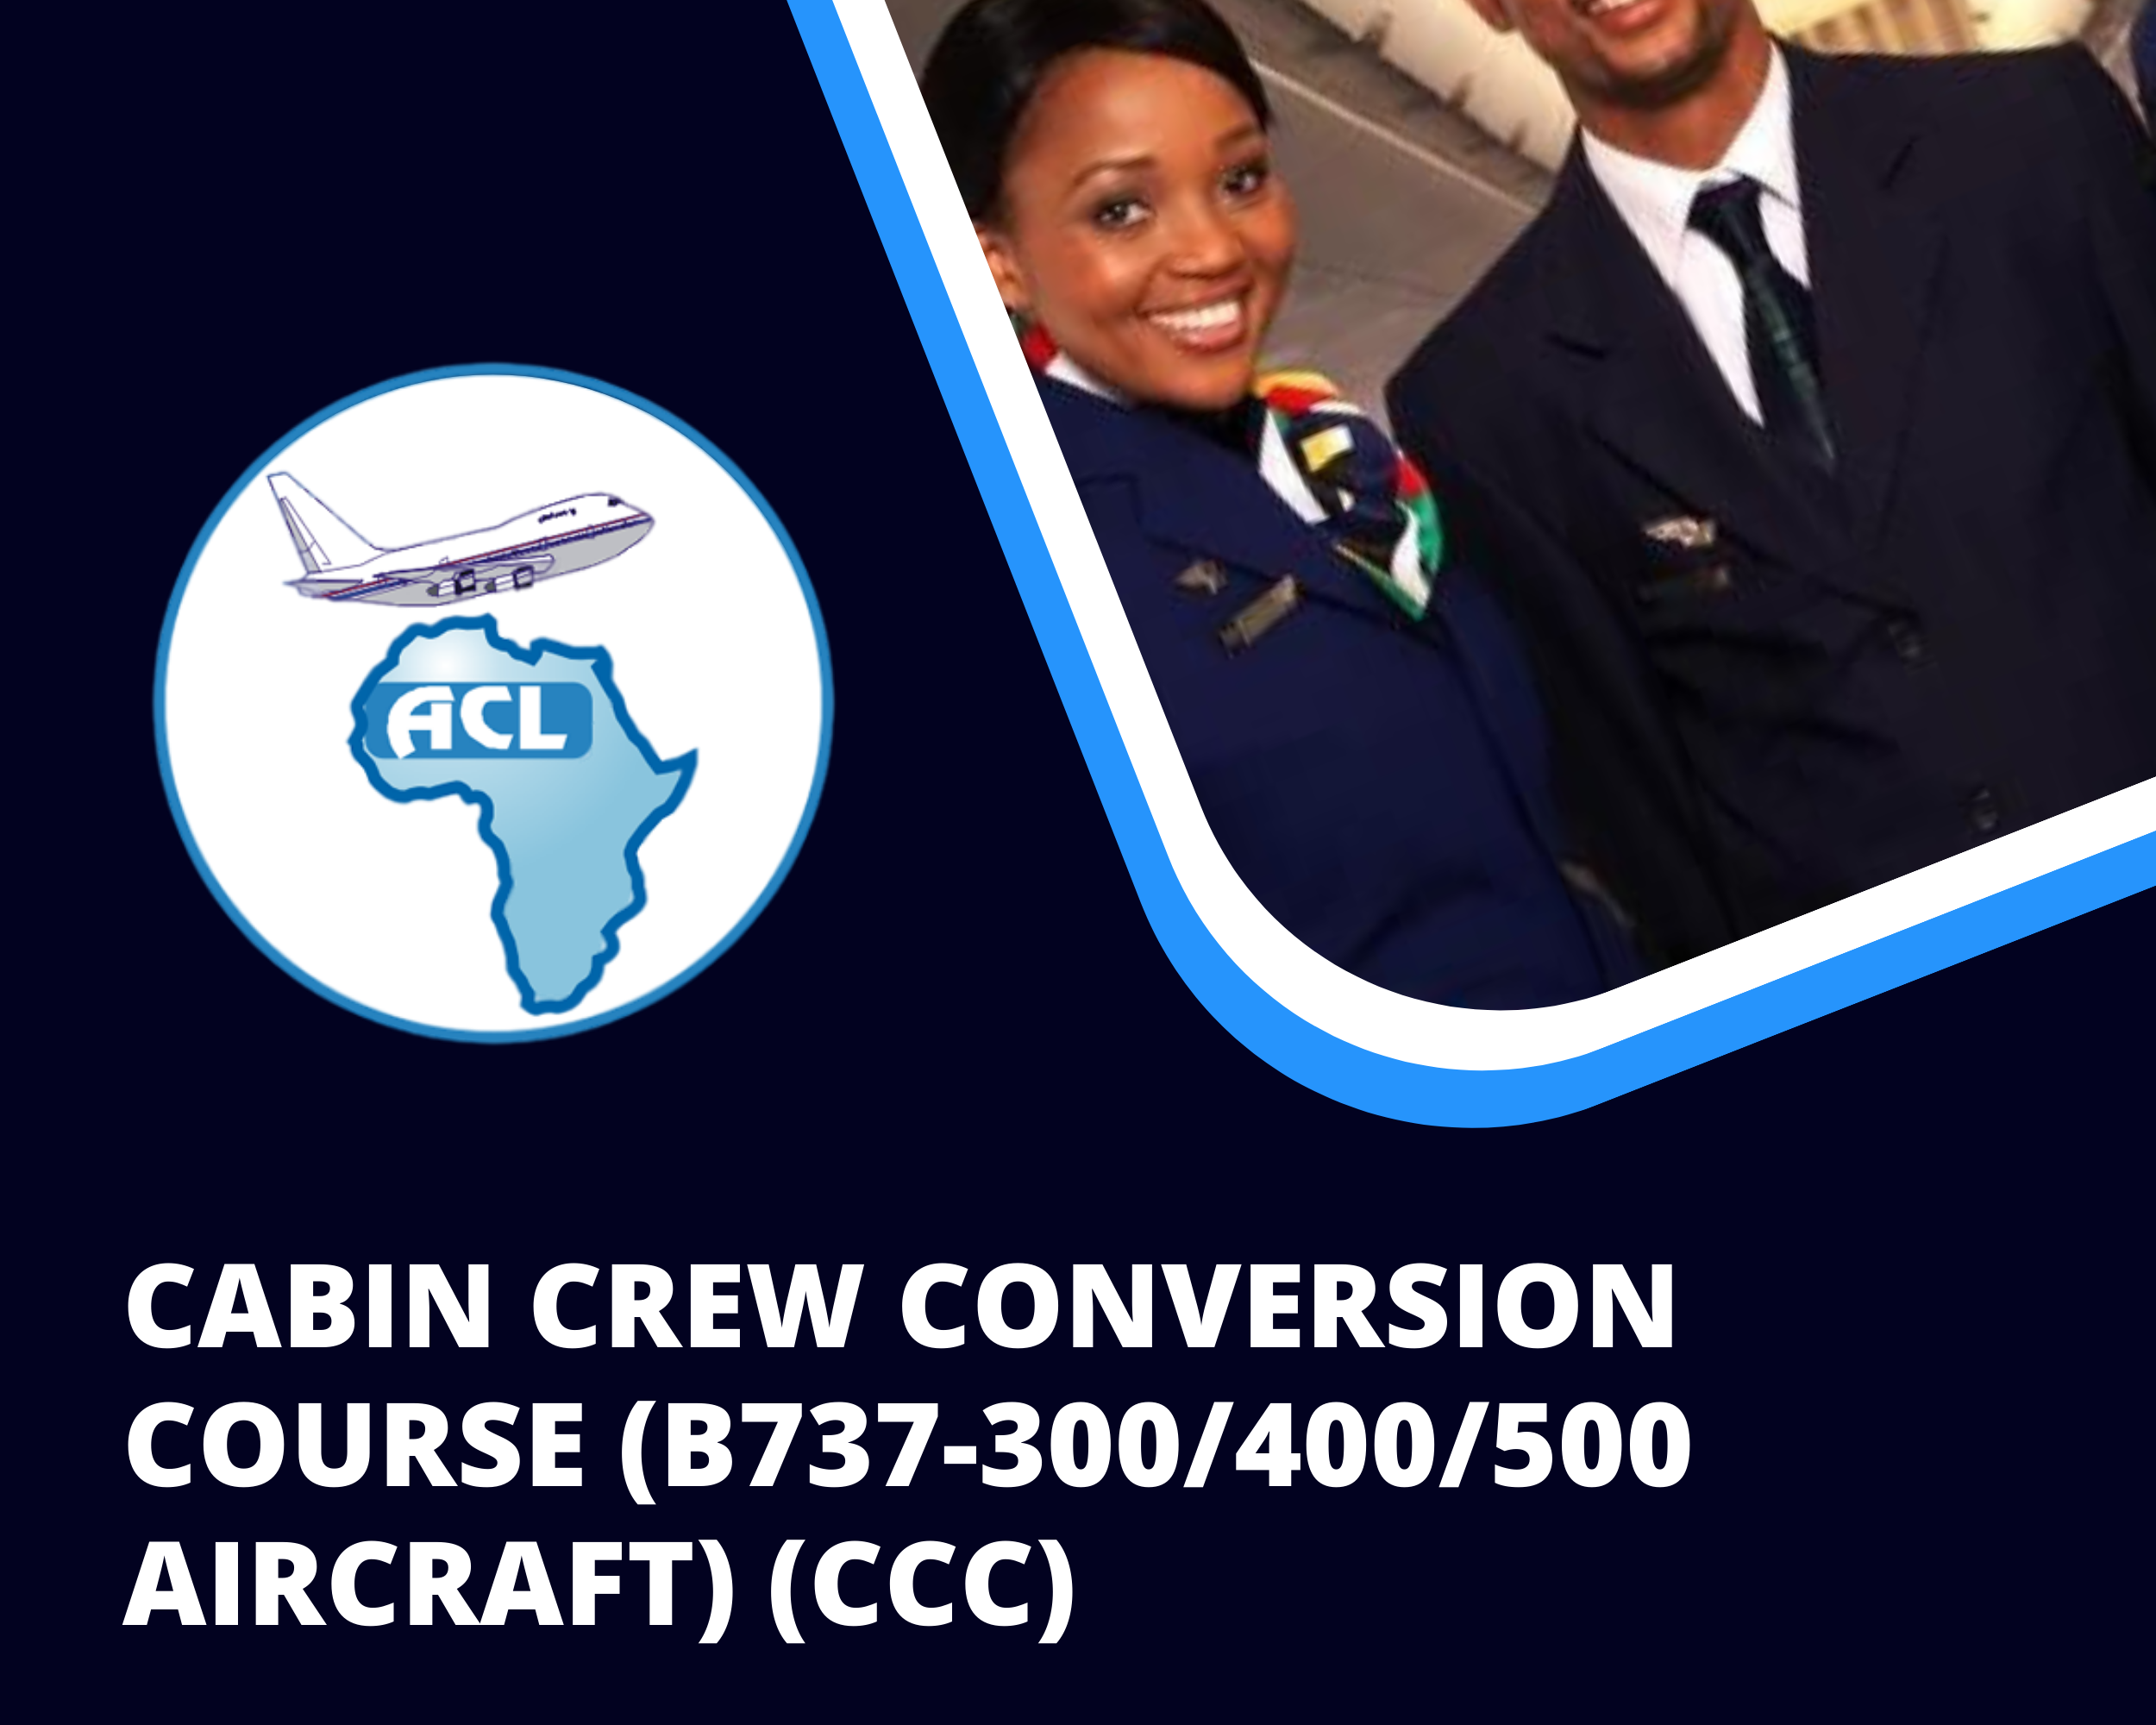 CABIN CREW CONVERSION COURSE (B737-300/400/500 AIRCRAFT) (CCC)